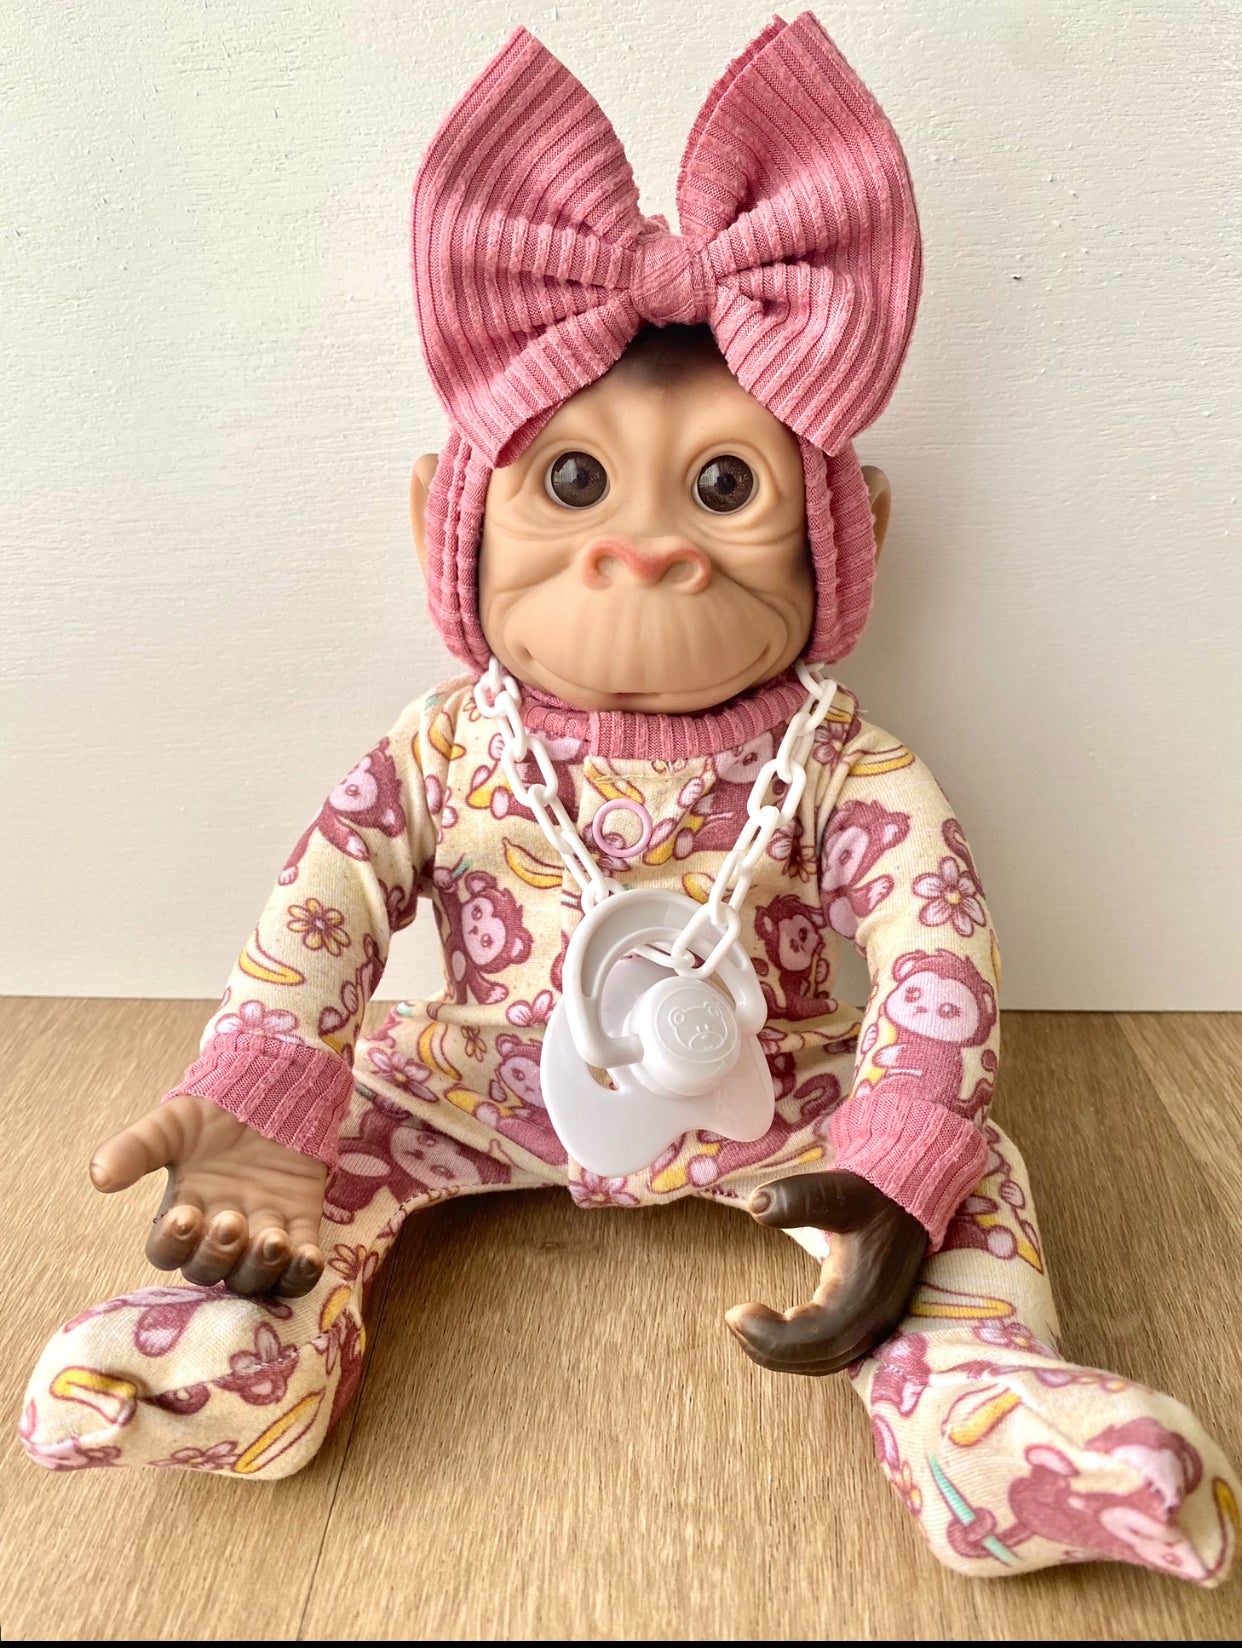 Baby Monkey in Handmade Pajamas and Bow